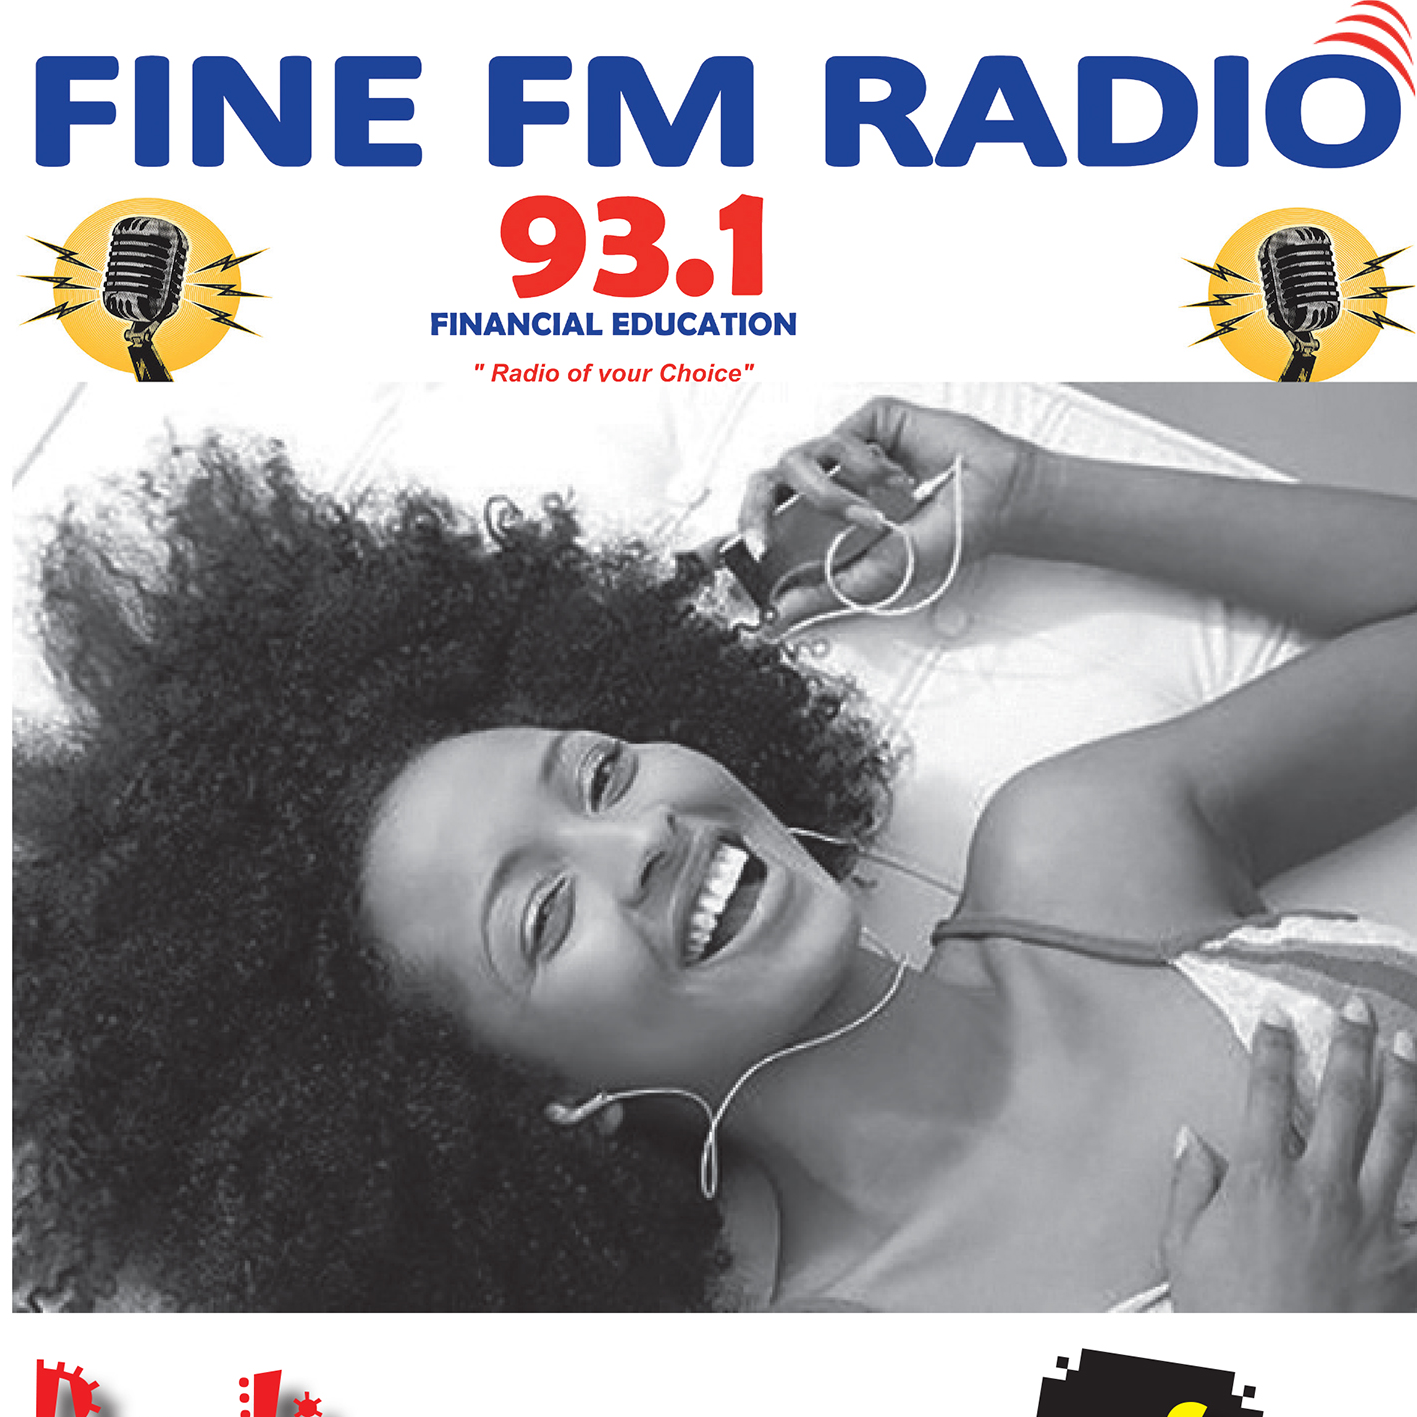 FINE FM RADIO